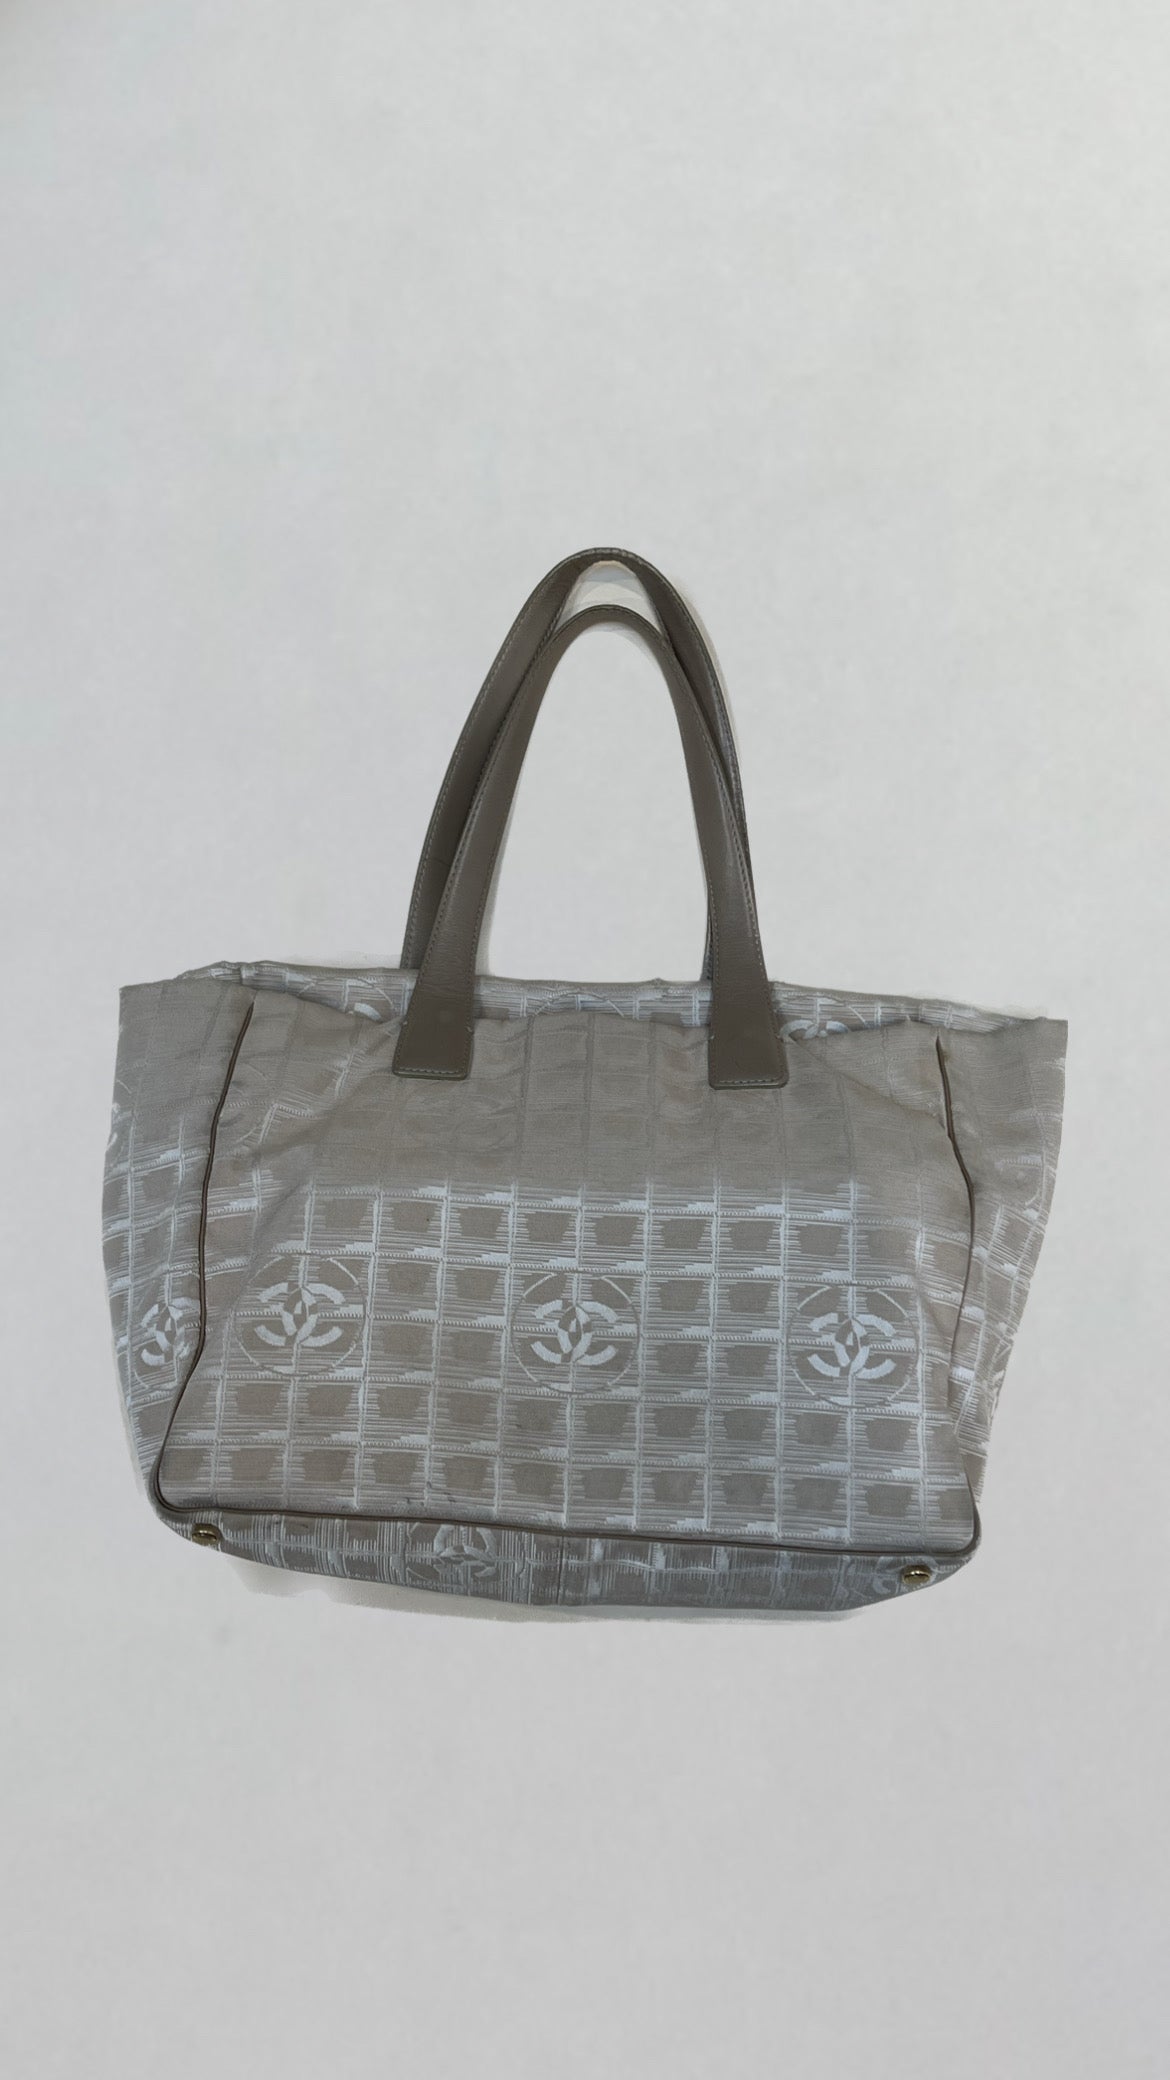 Chanel travel bag